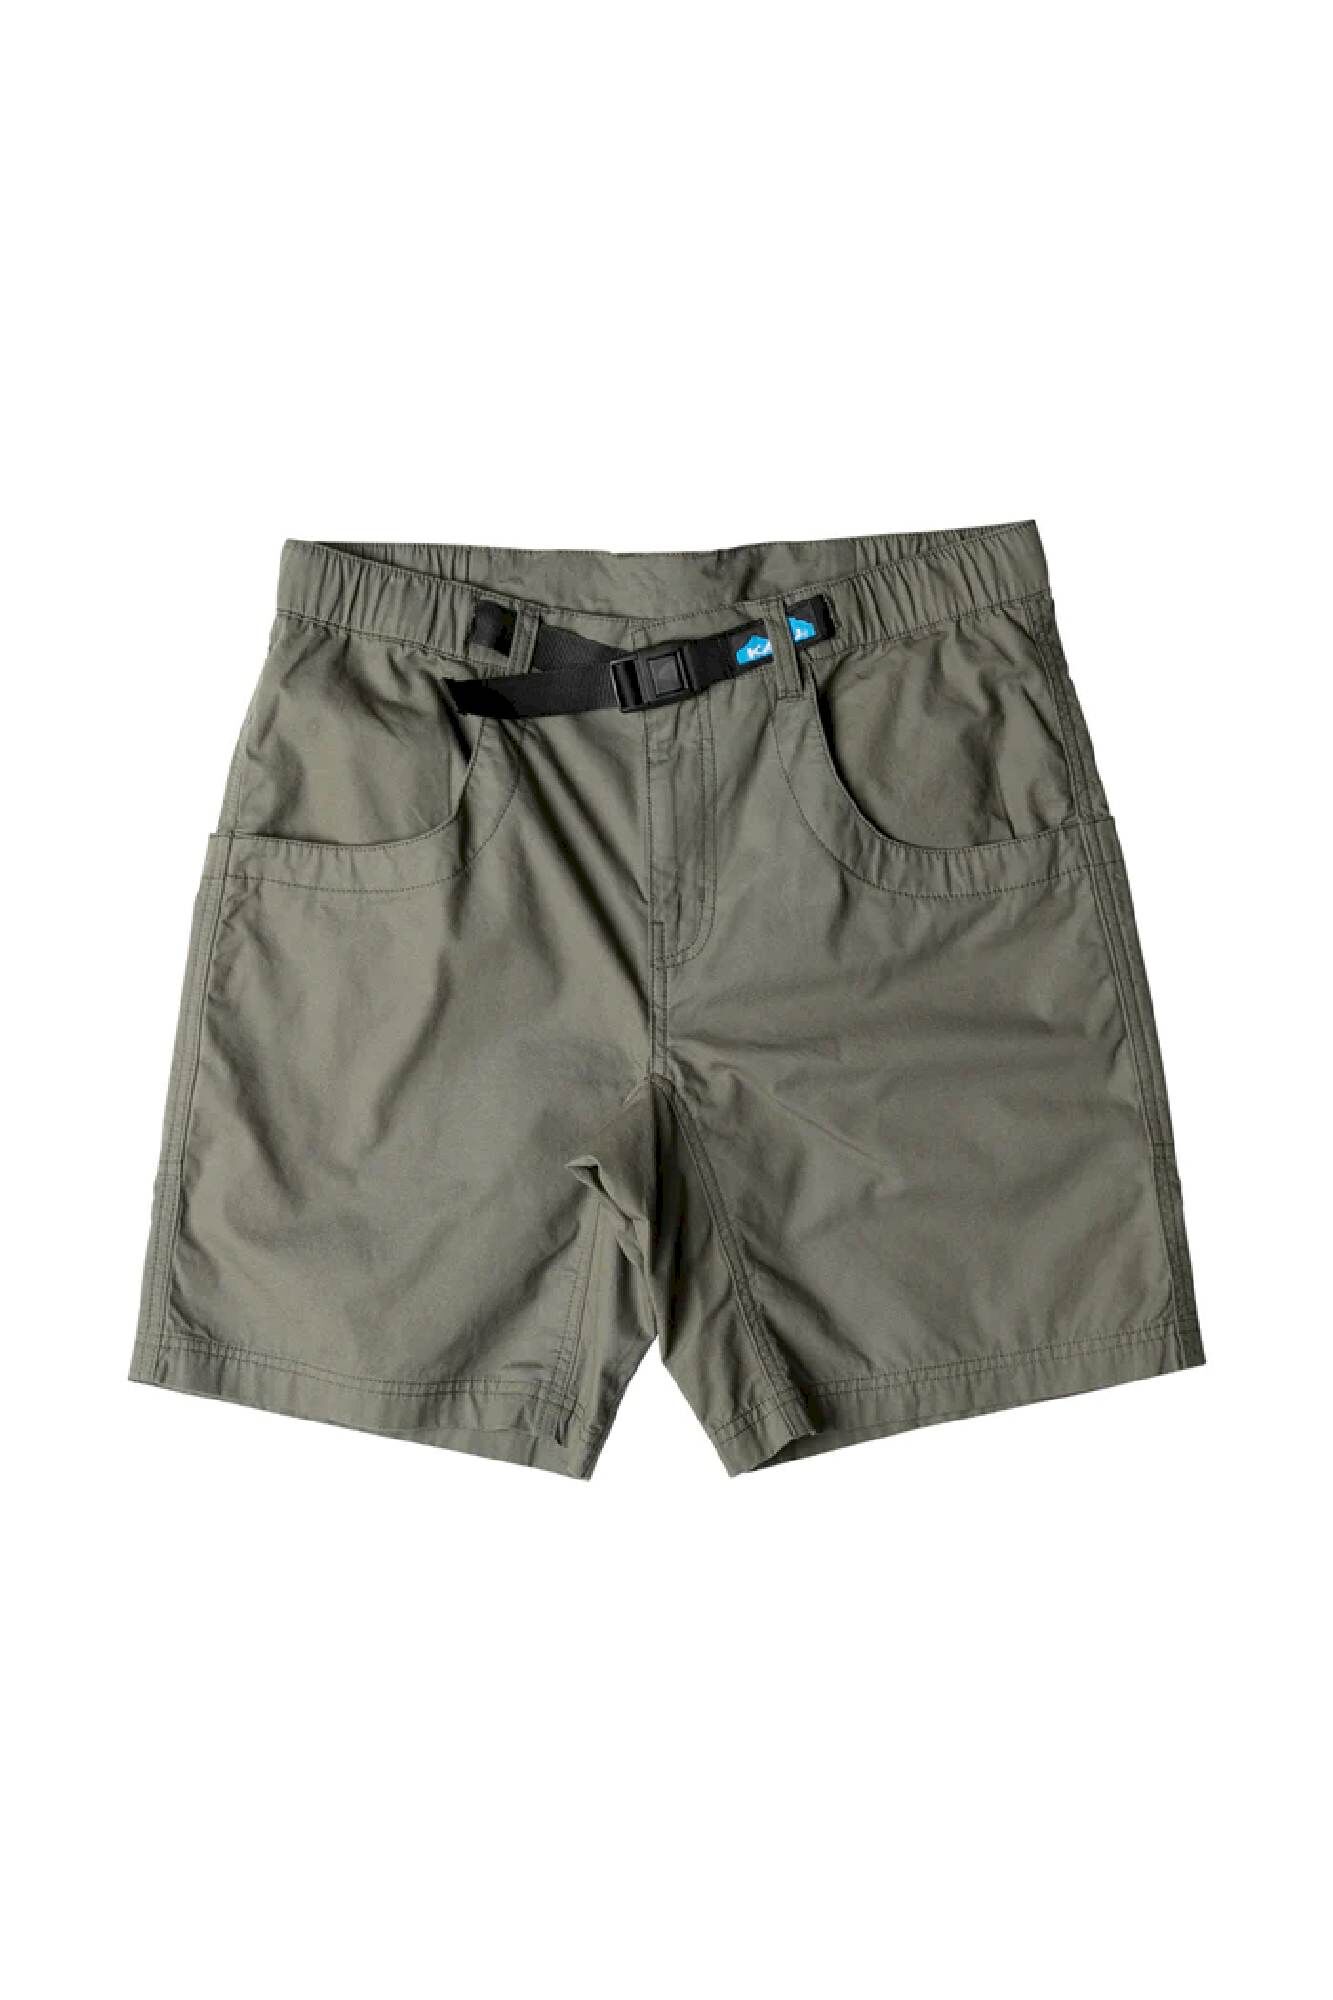 Kavu Chilli Lite Short - Pantalones cortos de trekking - Hombre | Hardloop